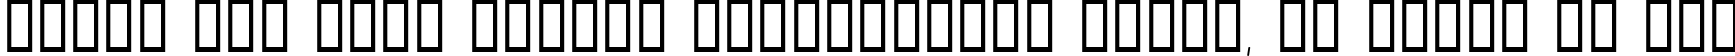 Пример написания шрифтом Quadlateral текста на русском